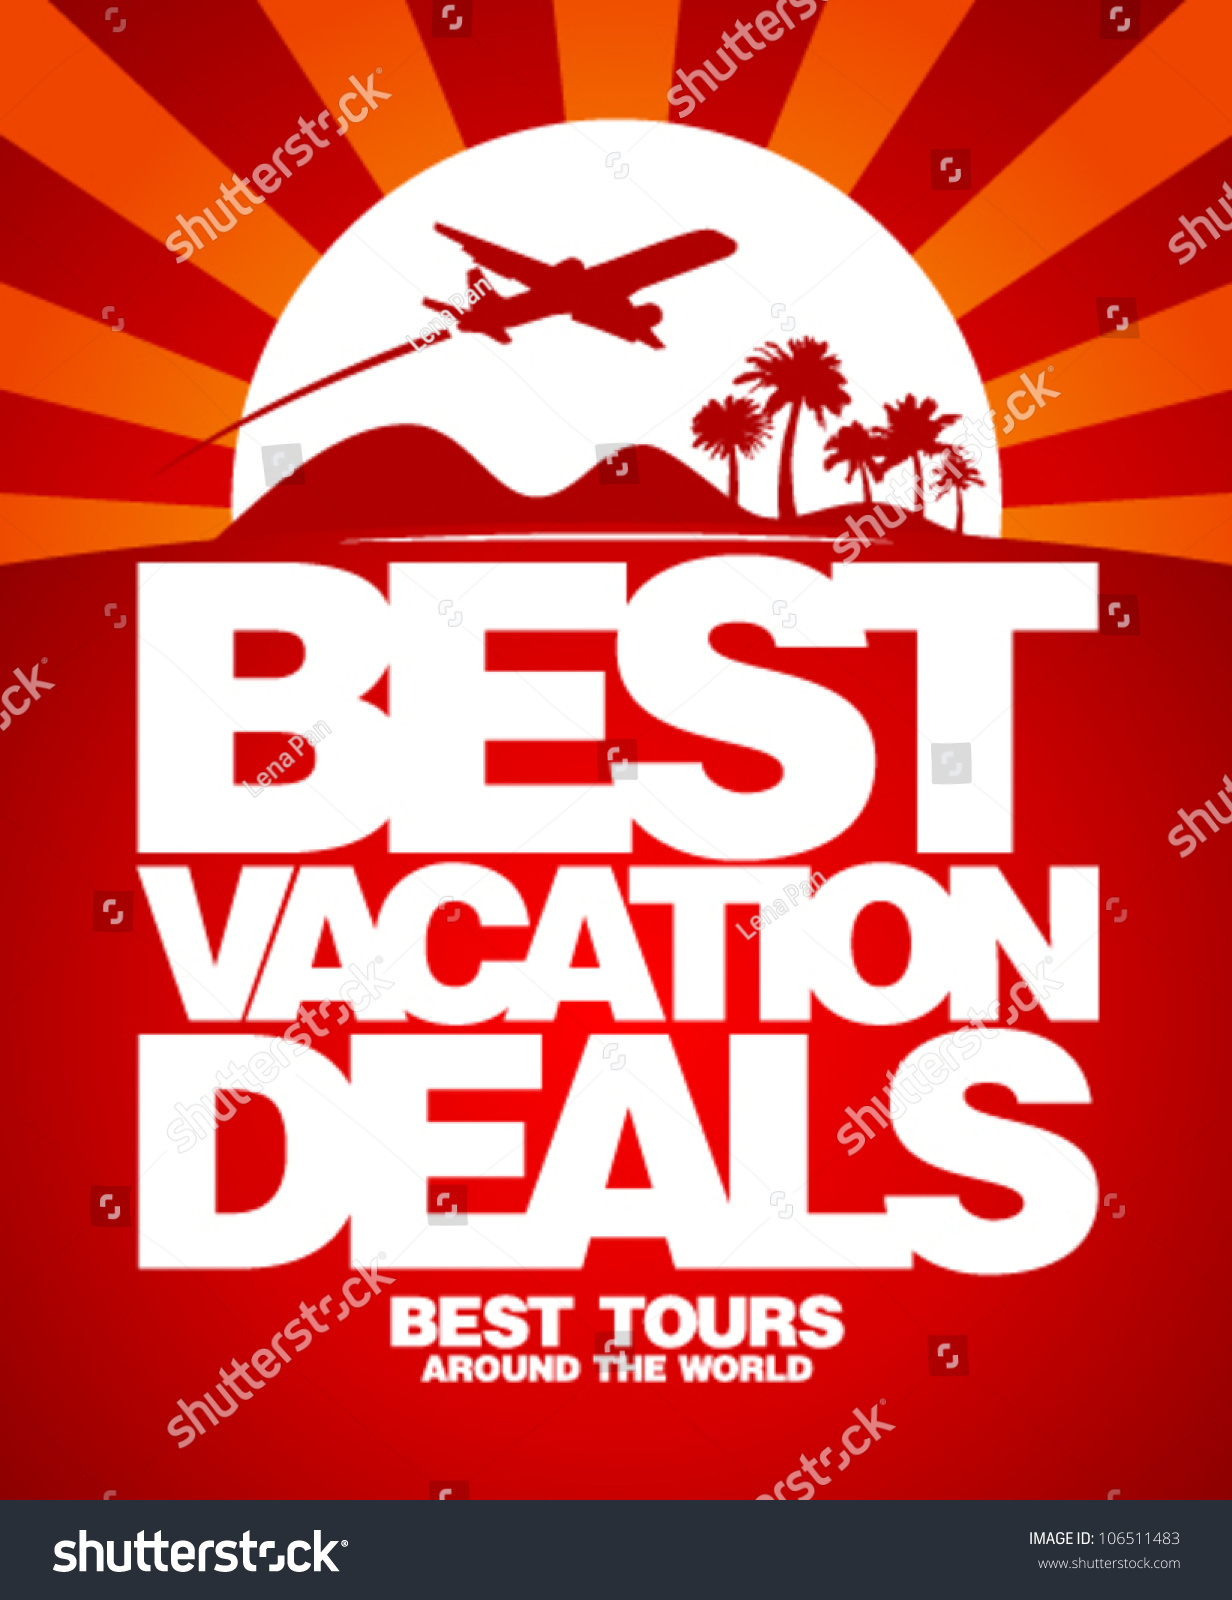 Best Vacation Deals